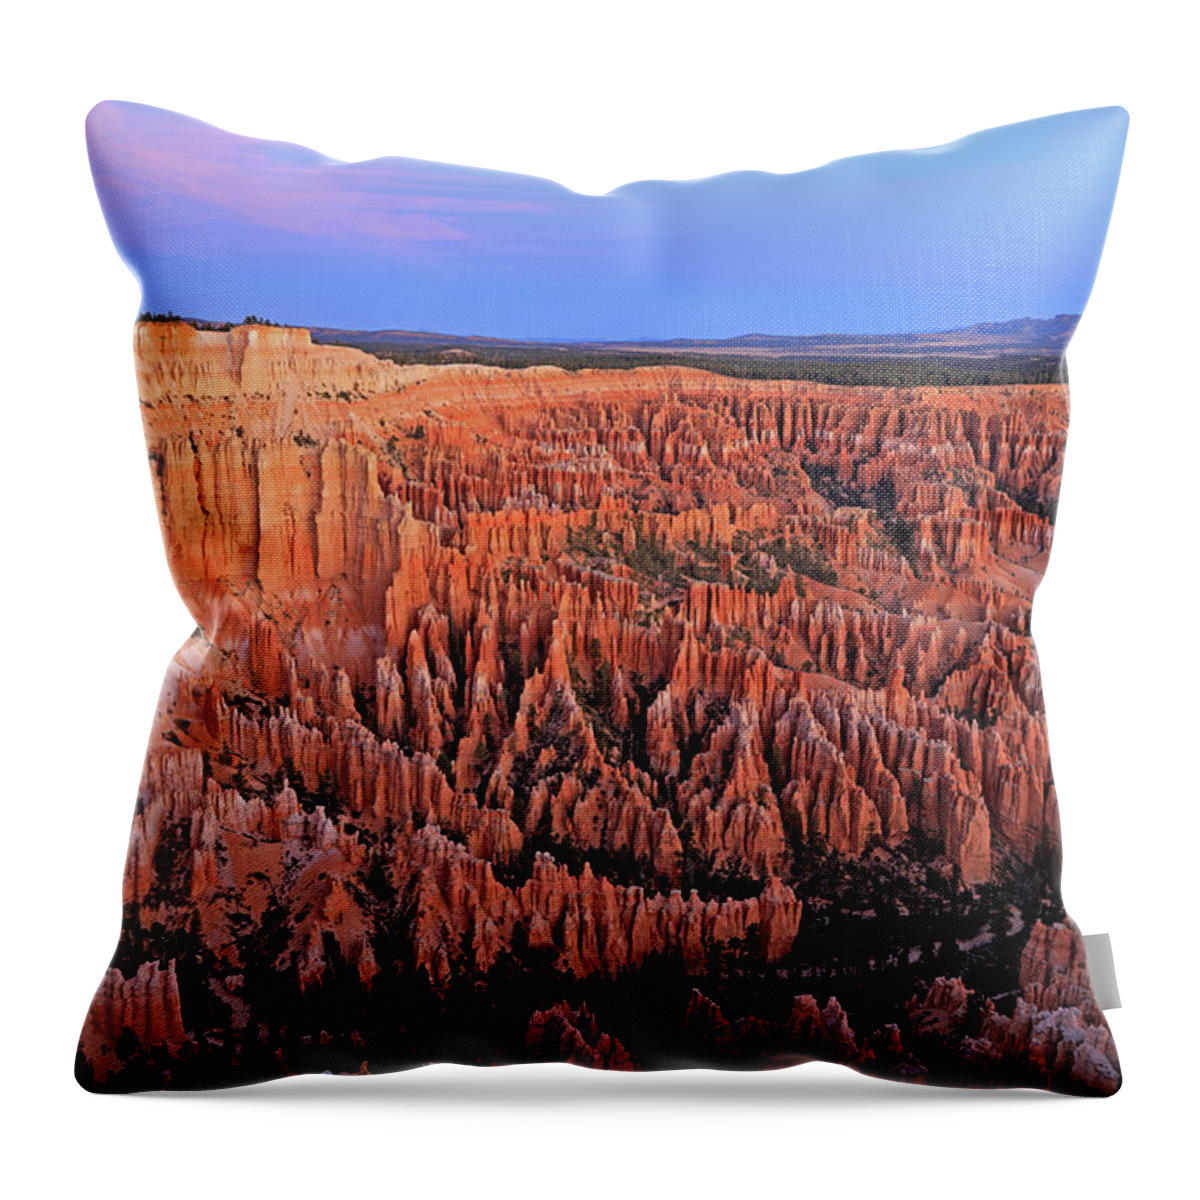 Bryce Canyon National Park Throw Pillow featuring the photograph Bryce Canyon National Park #4 by Richard Krebs